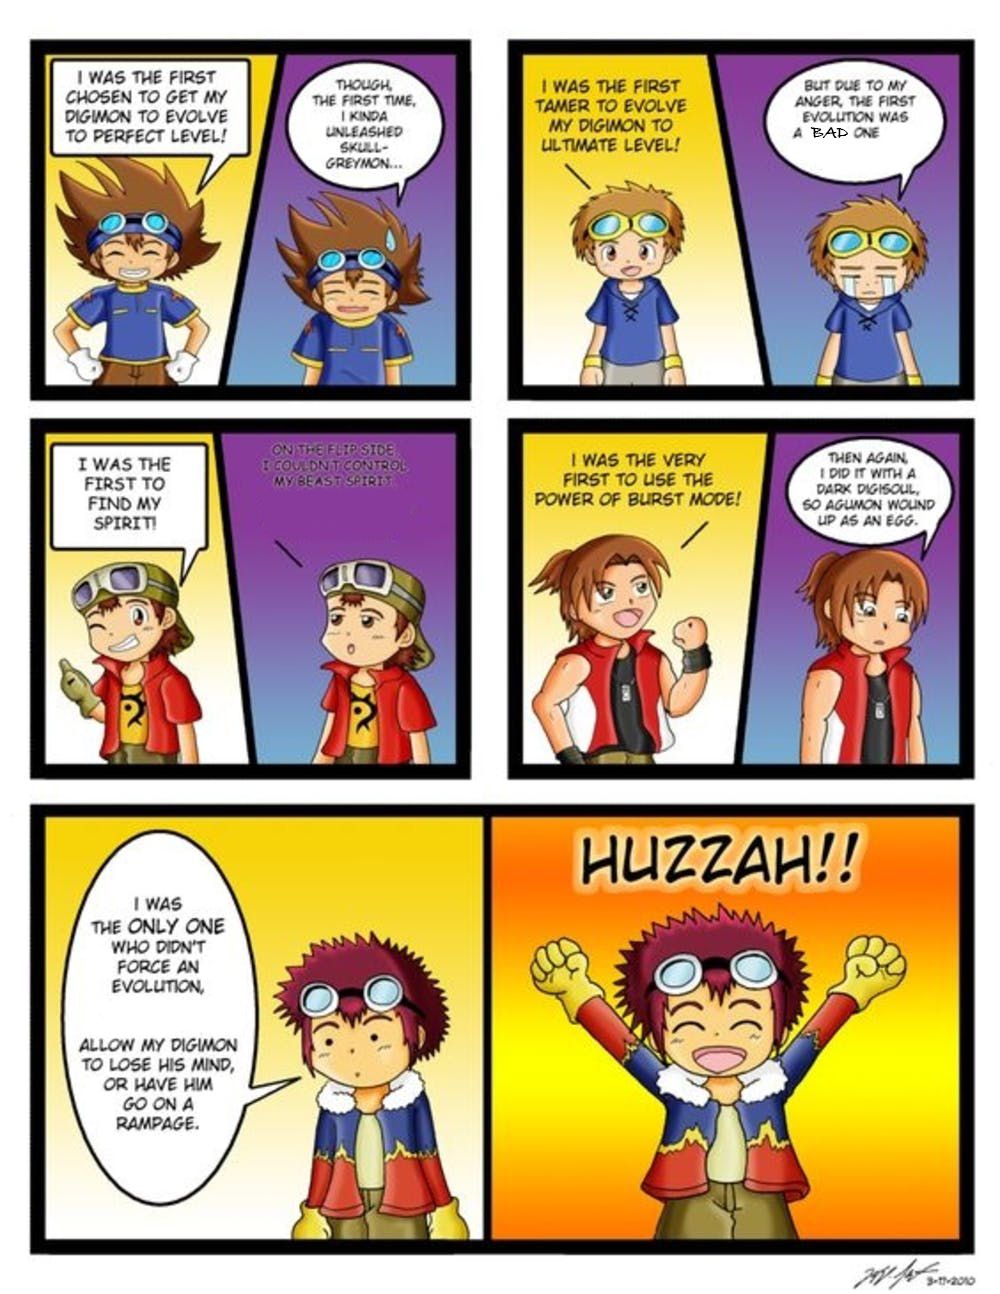 20 Hilarious Digimon Comics Only True Fans Will Understand